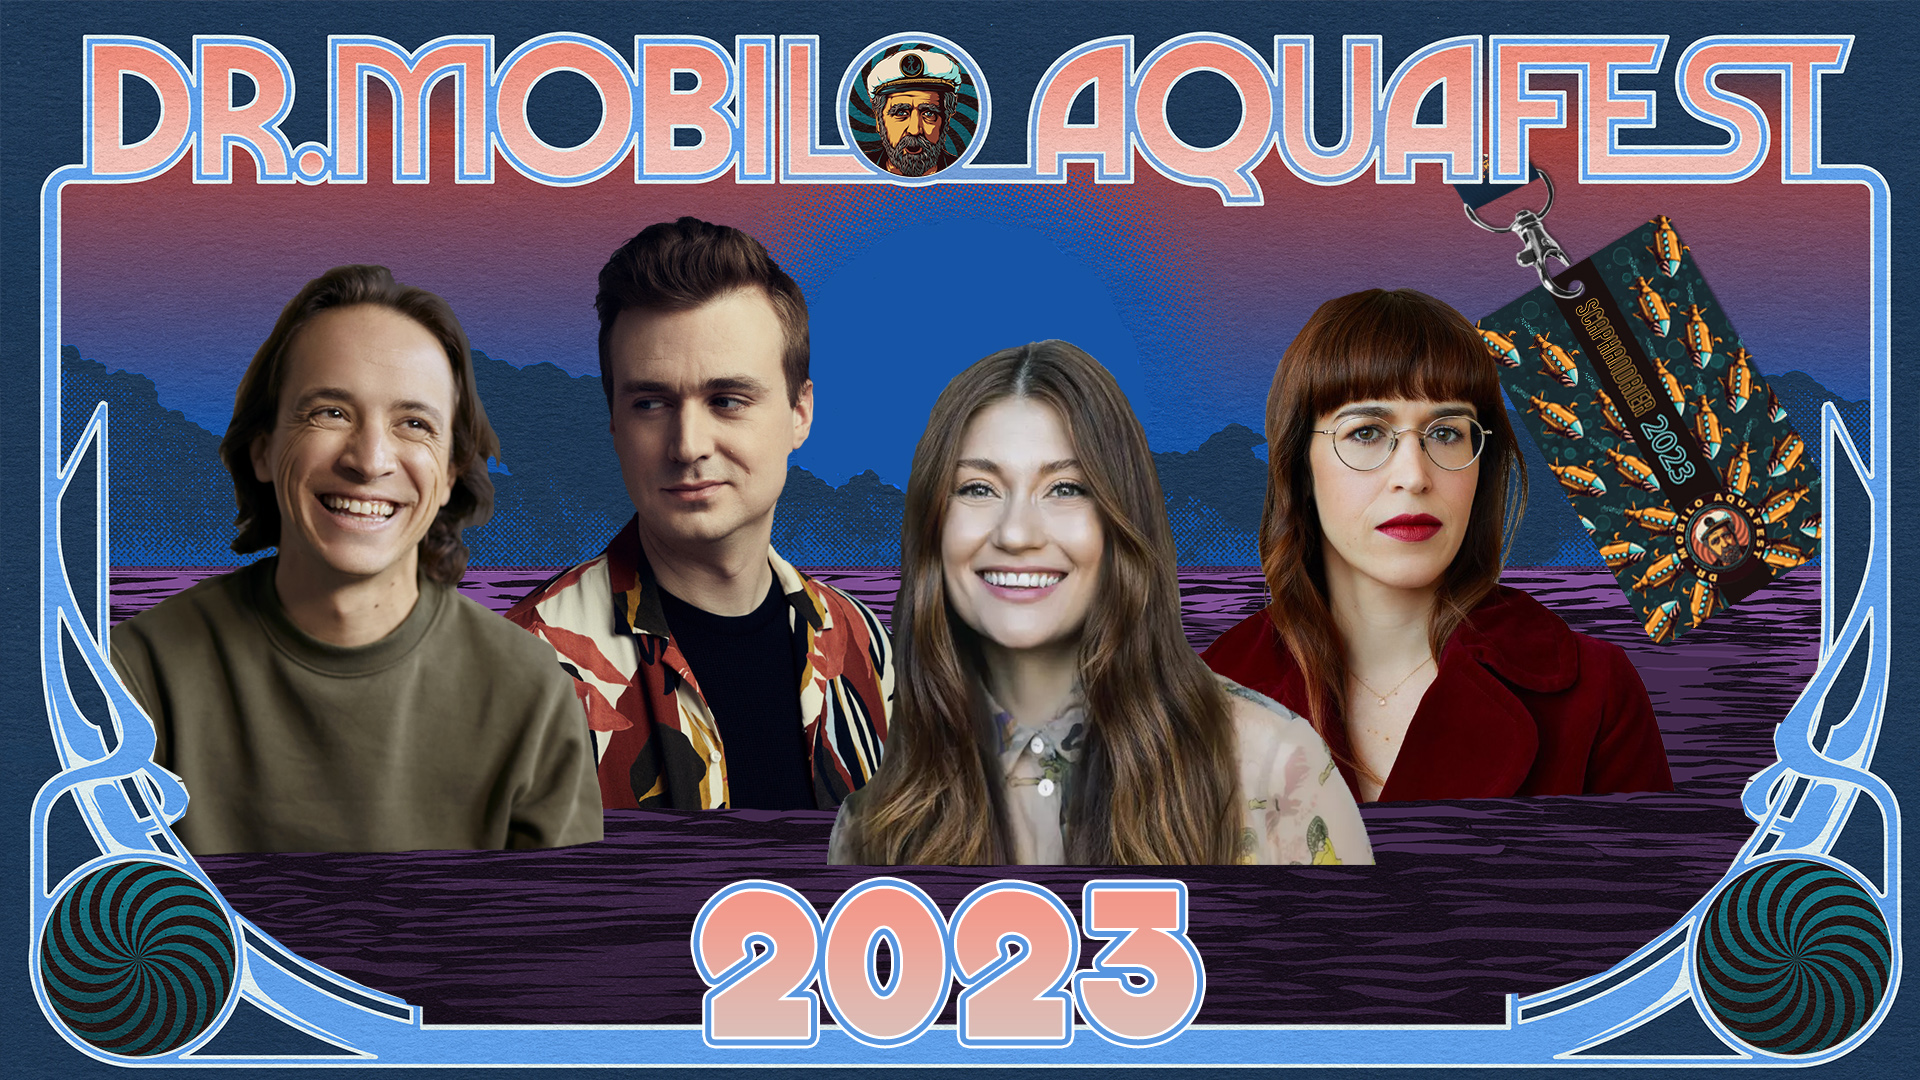 Dr. Mobilo Aquafest 2023